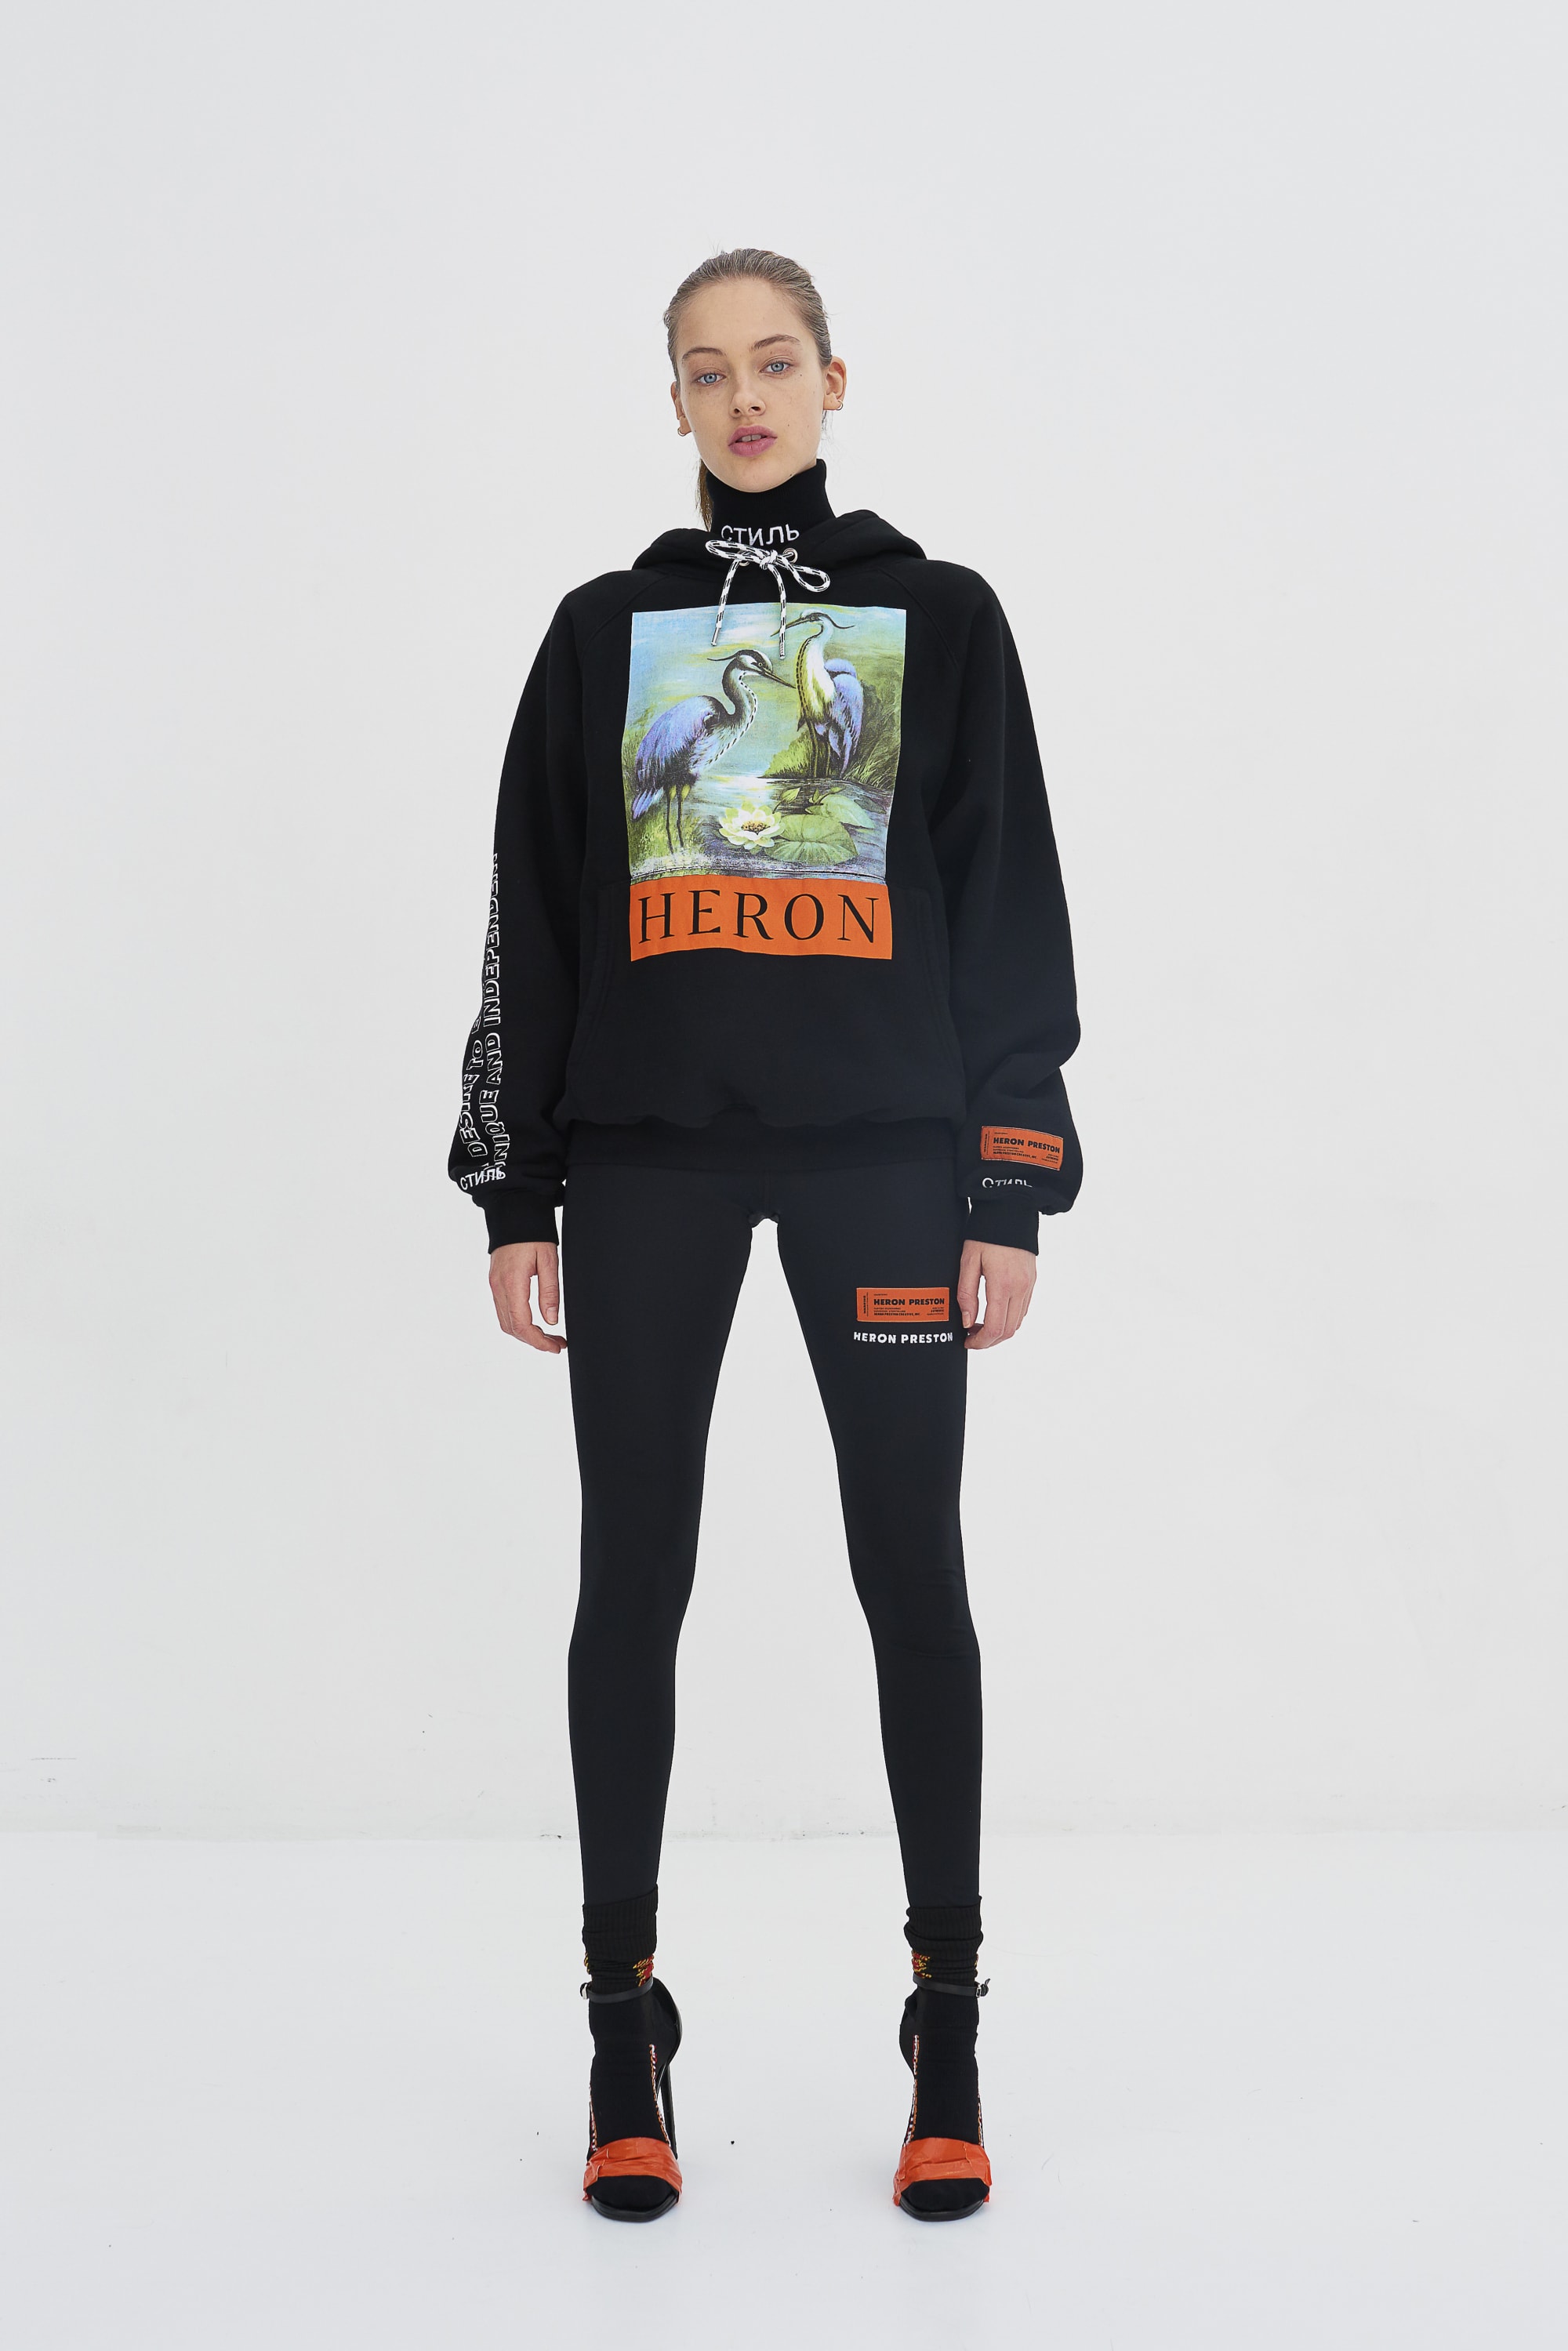 Heron Preston 2017 Fall Winter Collection Paris Fashion Week